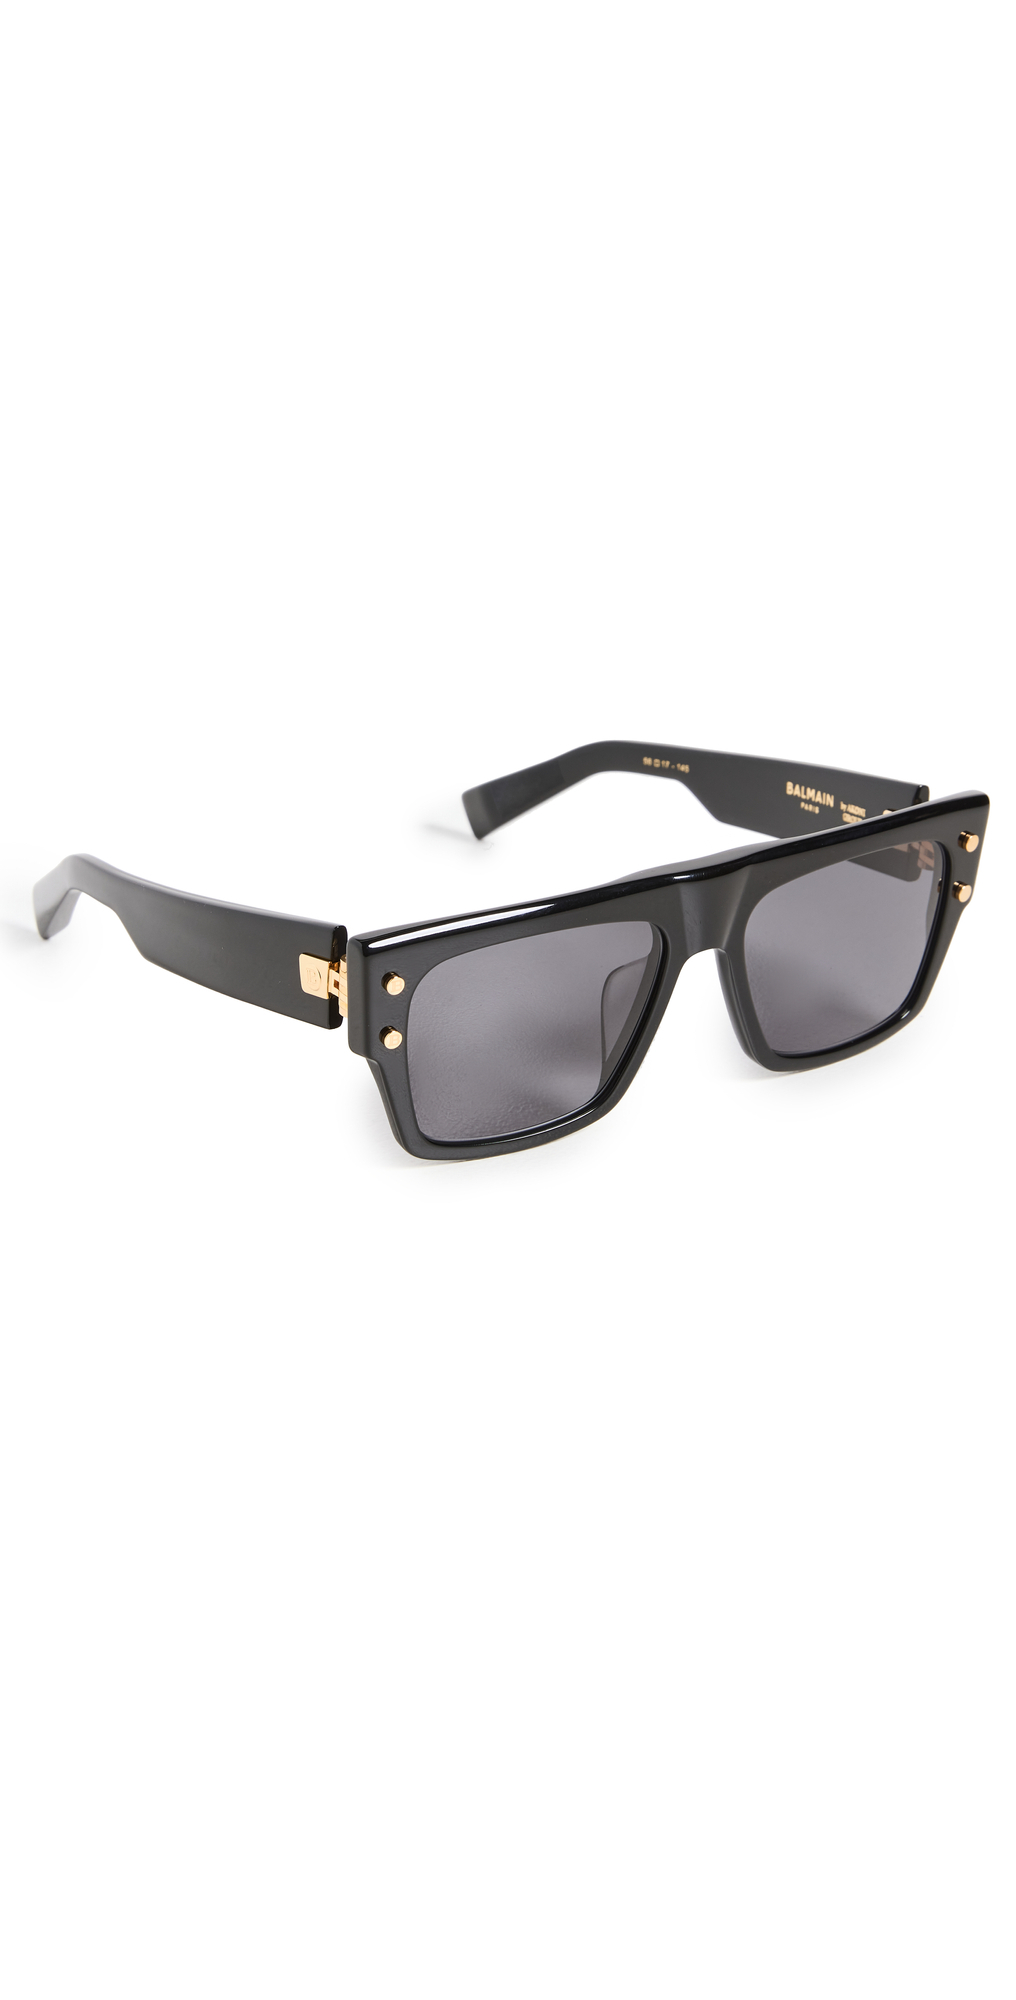 Balmain B - III Sunglasses in black / gold